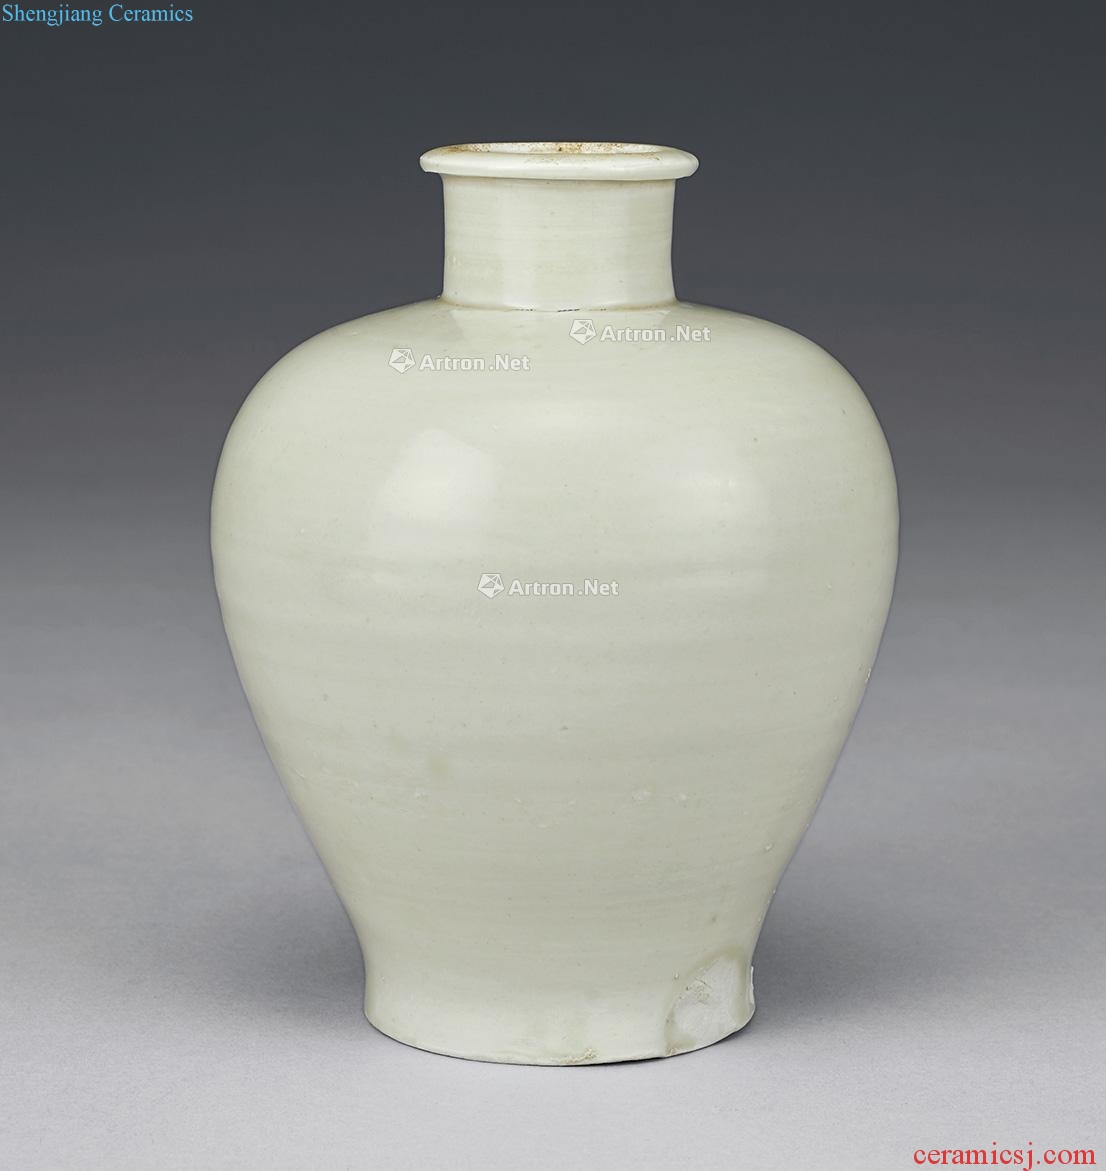 Song dynasty kiln craft bottles